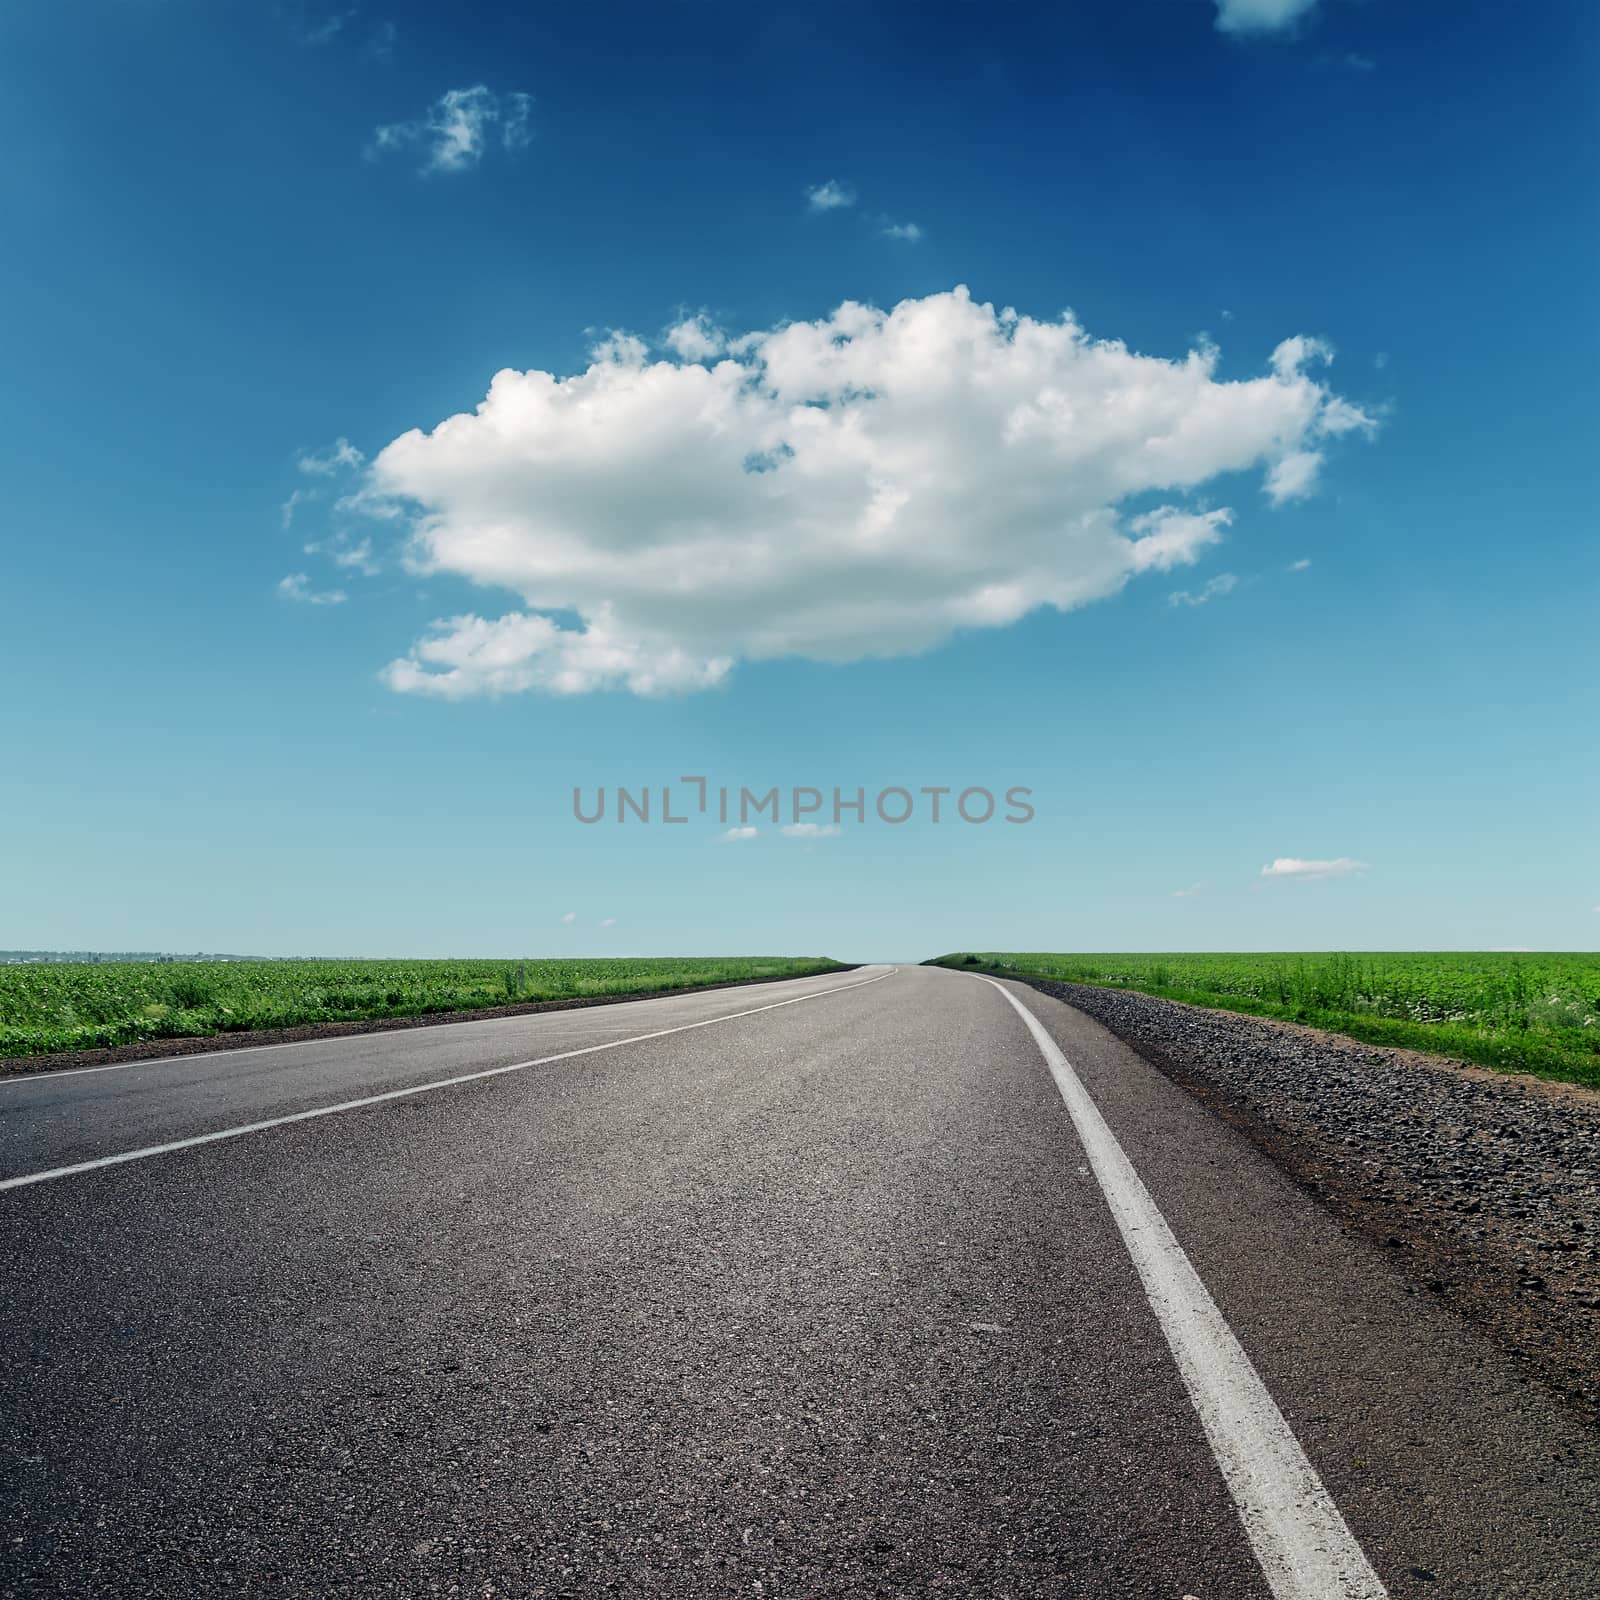 one big cloud and asphalt road by mycola